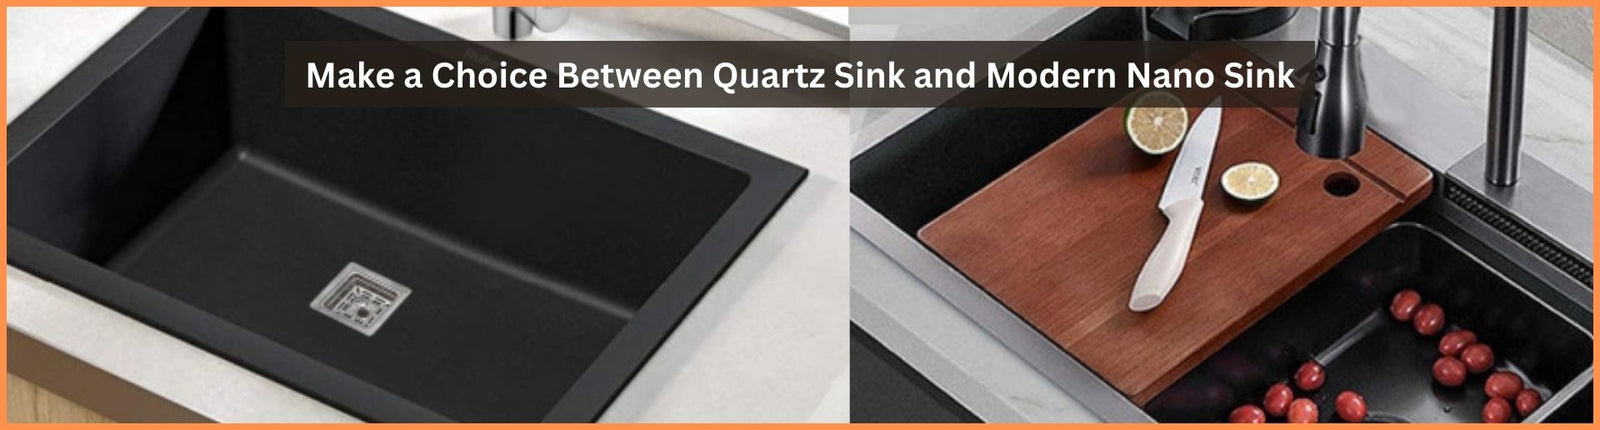 Make a Choice Between Quartz Sink and Modern Nano Sink